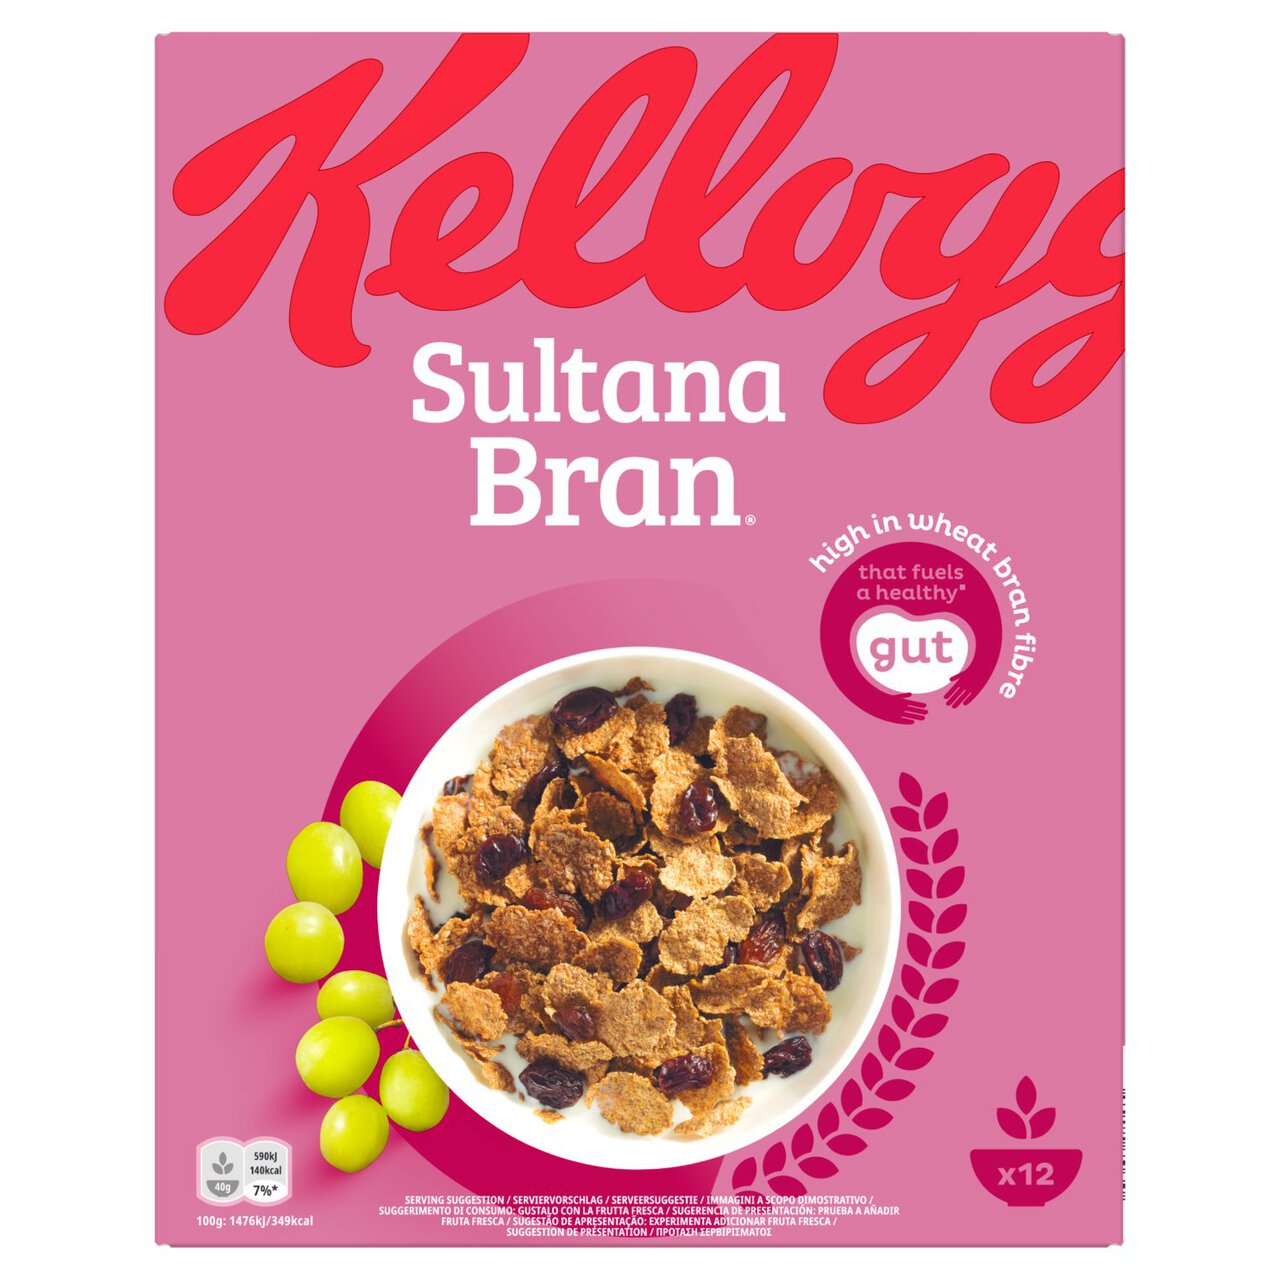 Kellogg's All-Bran Healthwise Sultana Bran Flakes 500g